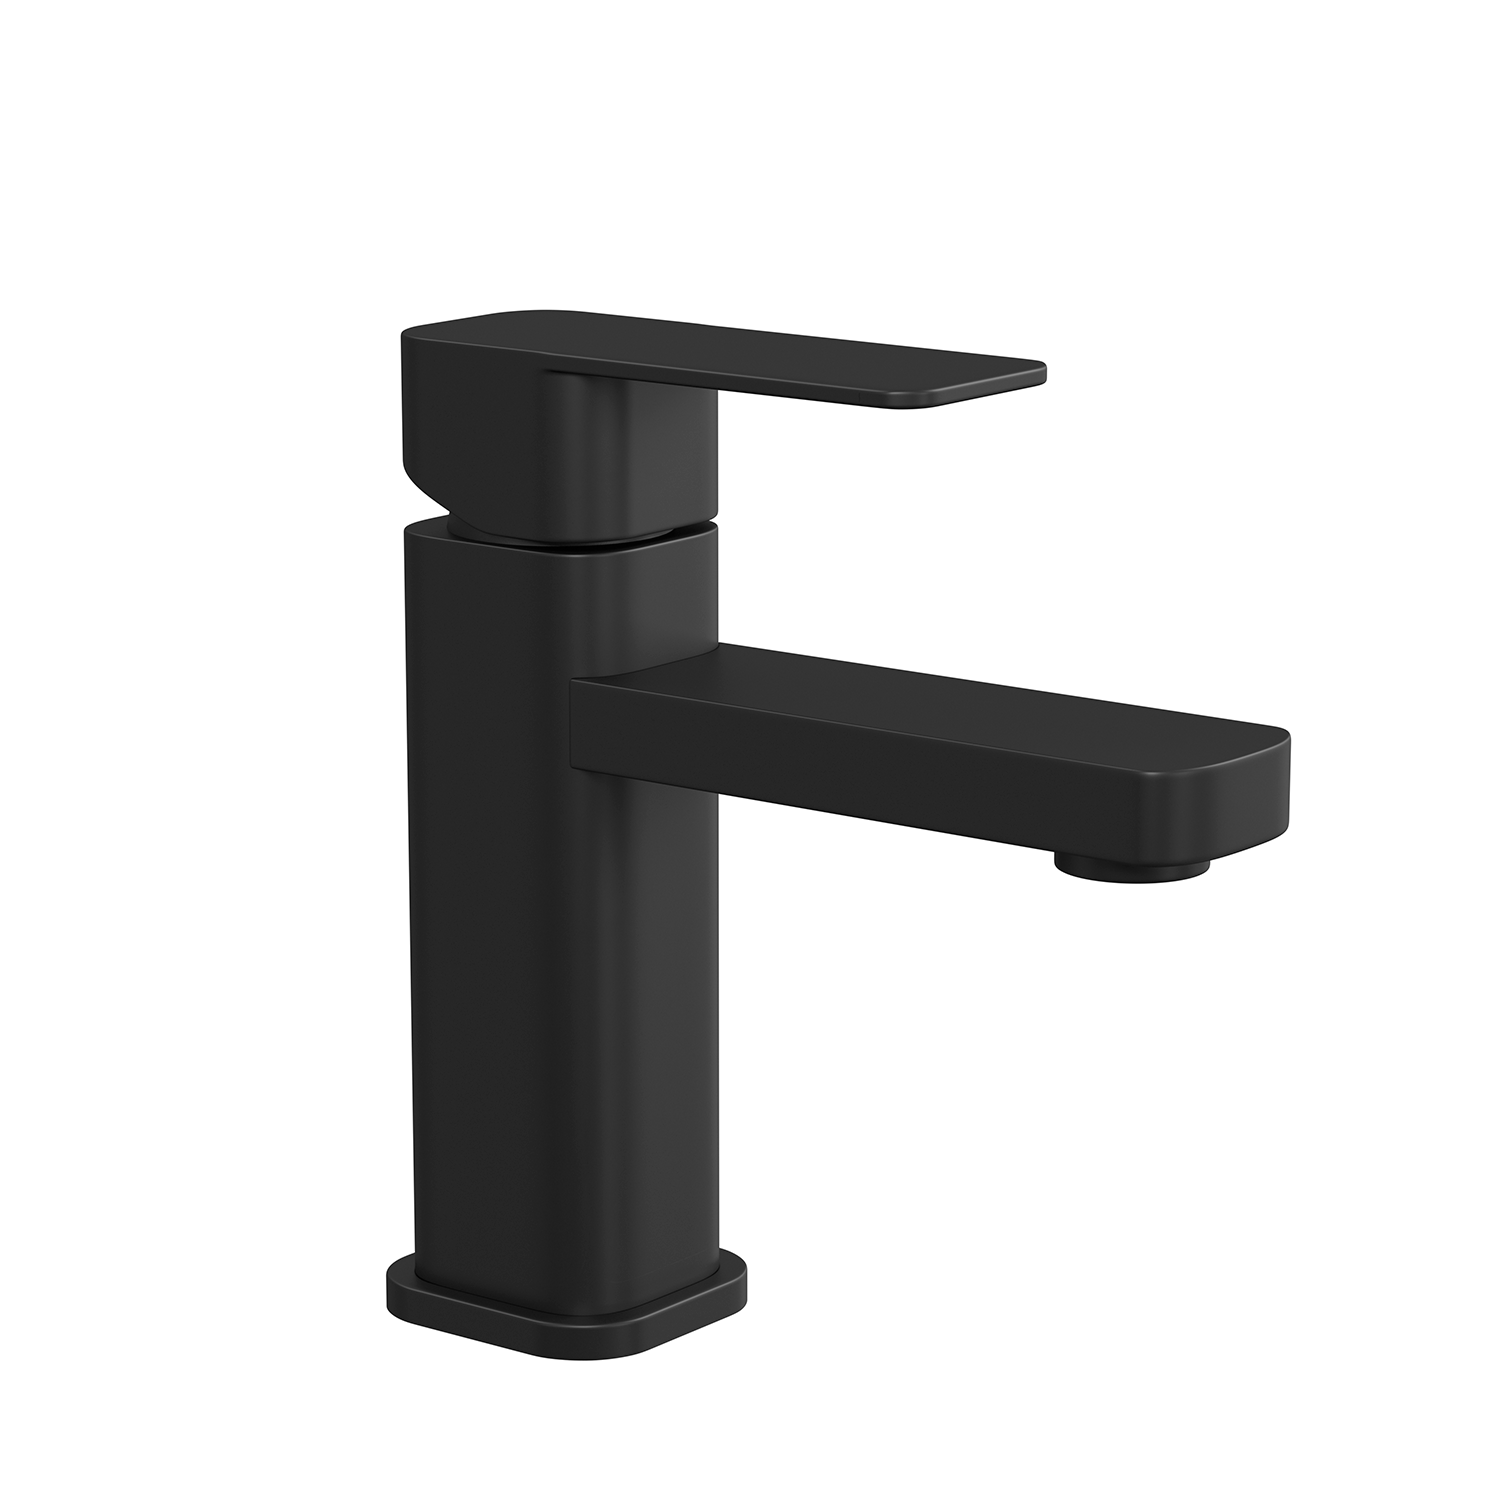 DAX Single Handle Bathroom Faucet, Brass Body, Chrome Finish, 4 x 7 Inches (DAX-6941A)